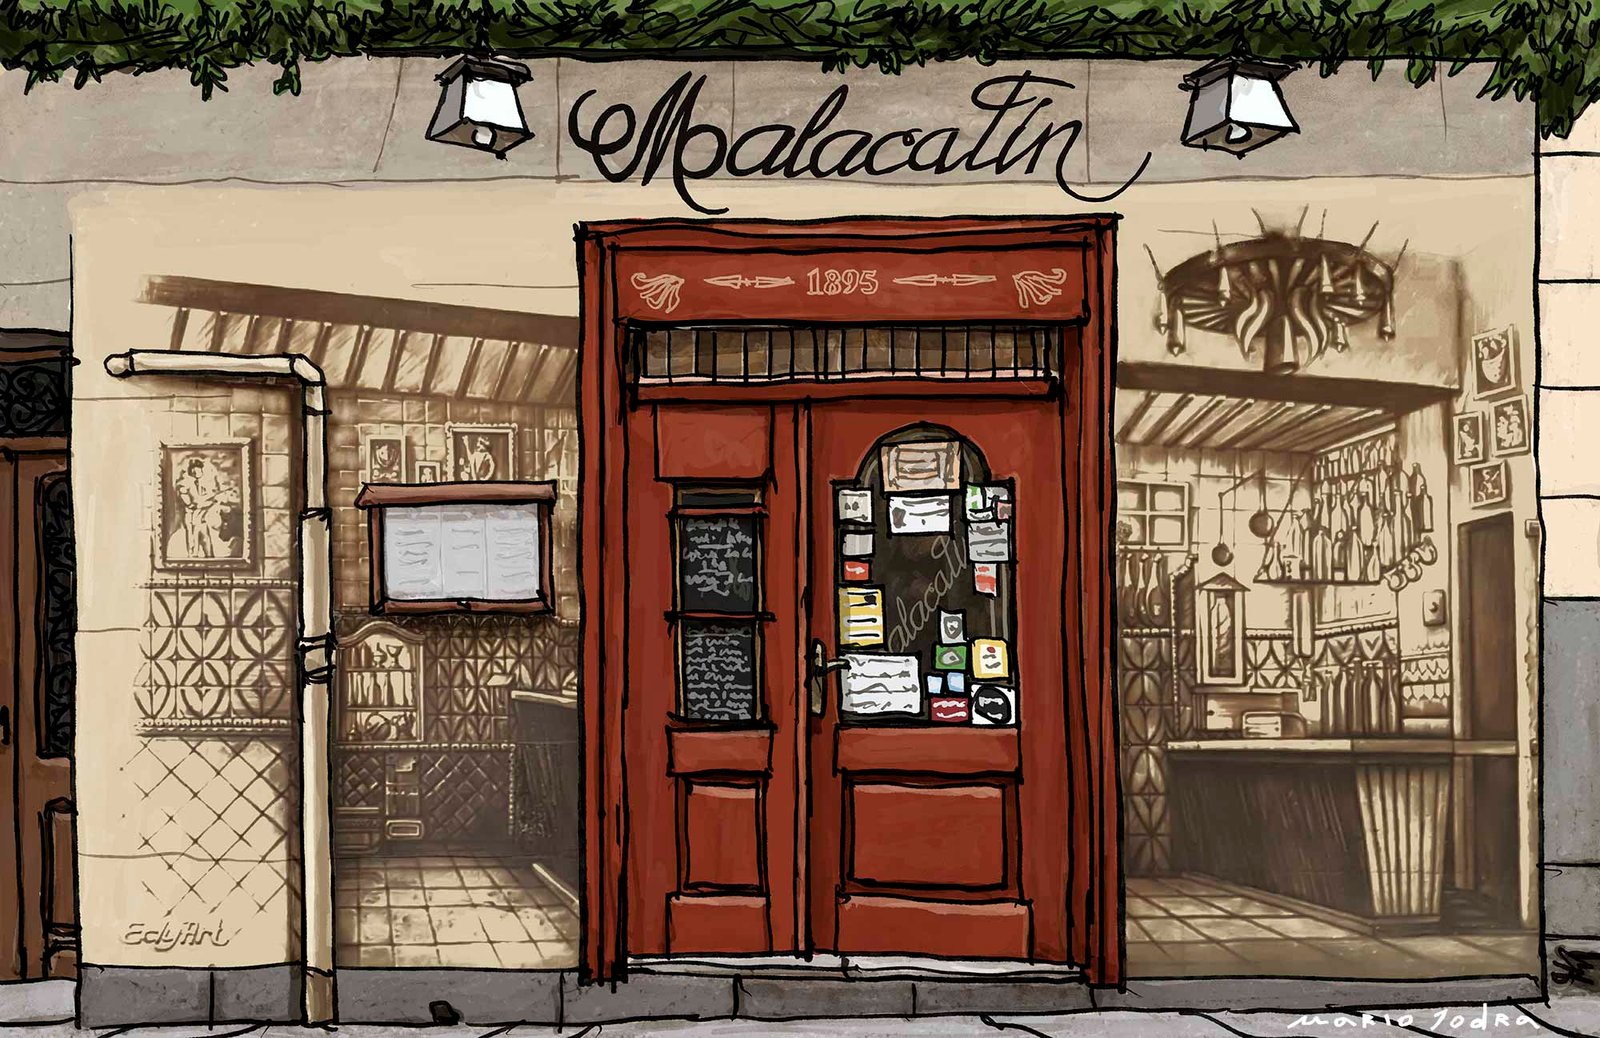 Mario Jodra illustration Art - Malacatín. Madrid restaurants. Since 1895